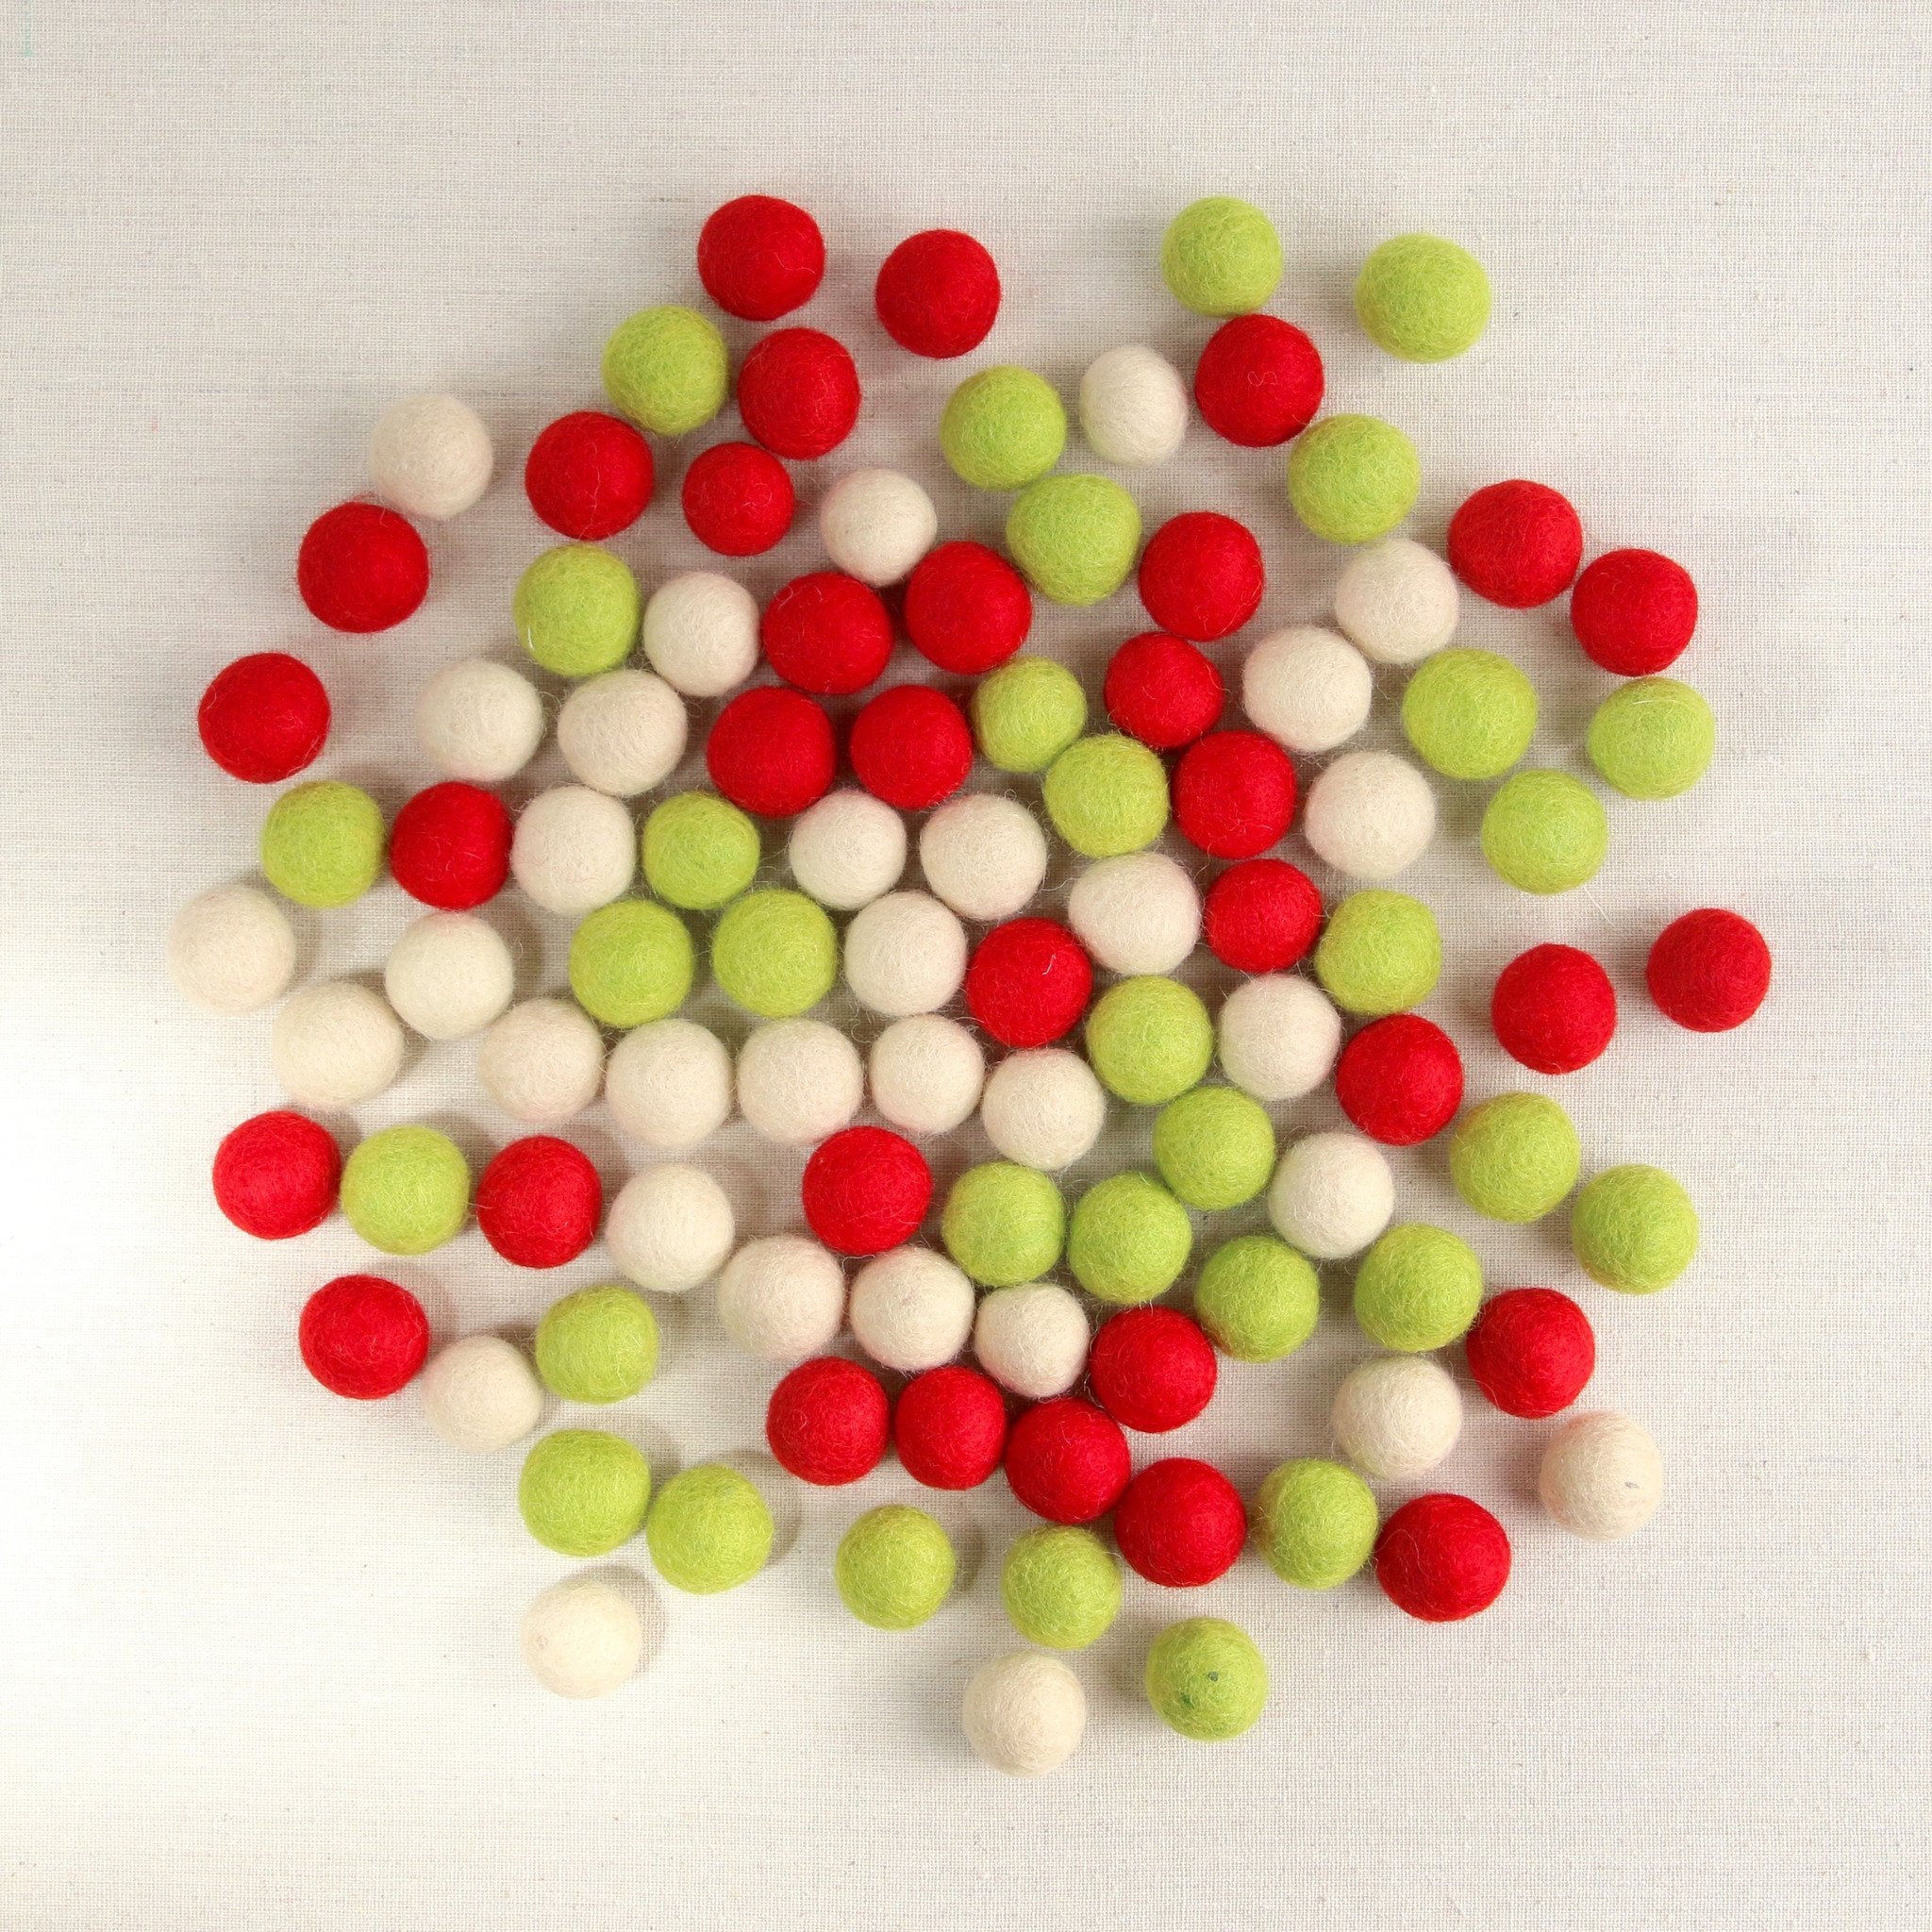 BQTQ 2100 Pieces Christmas Pom Pom Balls Mini Pom Pom for Craft Making and  Christmas Decorations (4 Sizes, White, Green, Red)